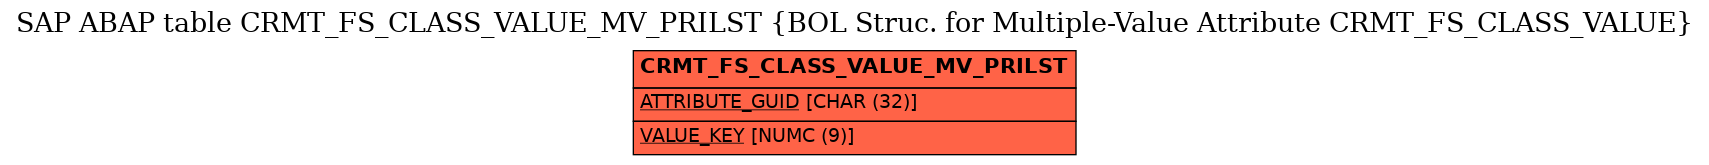 E-R Diagram for table CRMT_FS_CLASS_VALUE_MV_PRILST (BOL Struc. for Multiple-Value Attribute CRMT_FS_CLASS_VALUE)